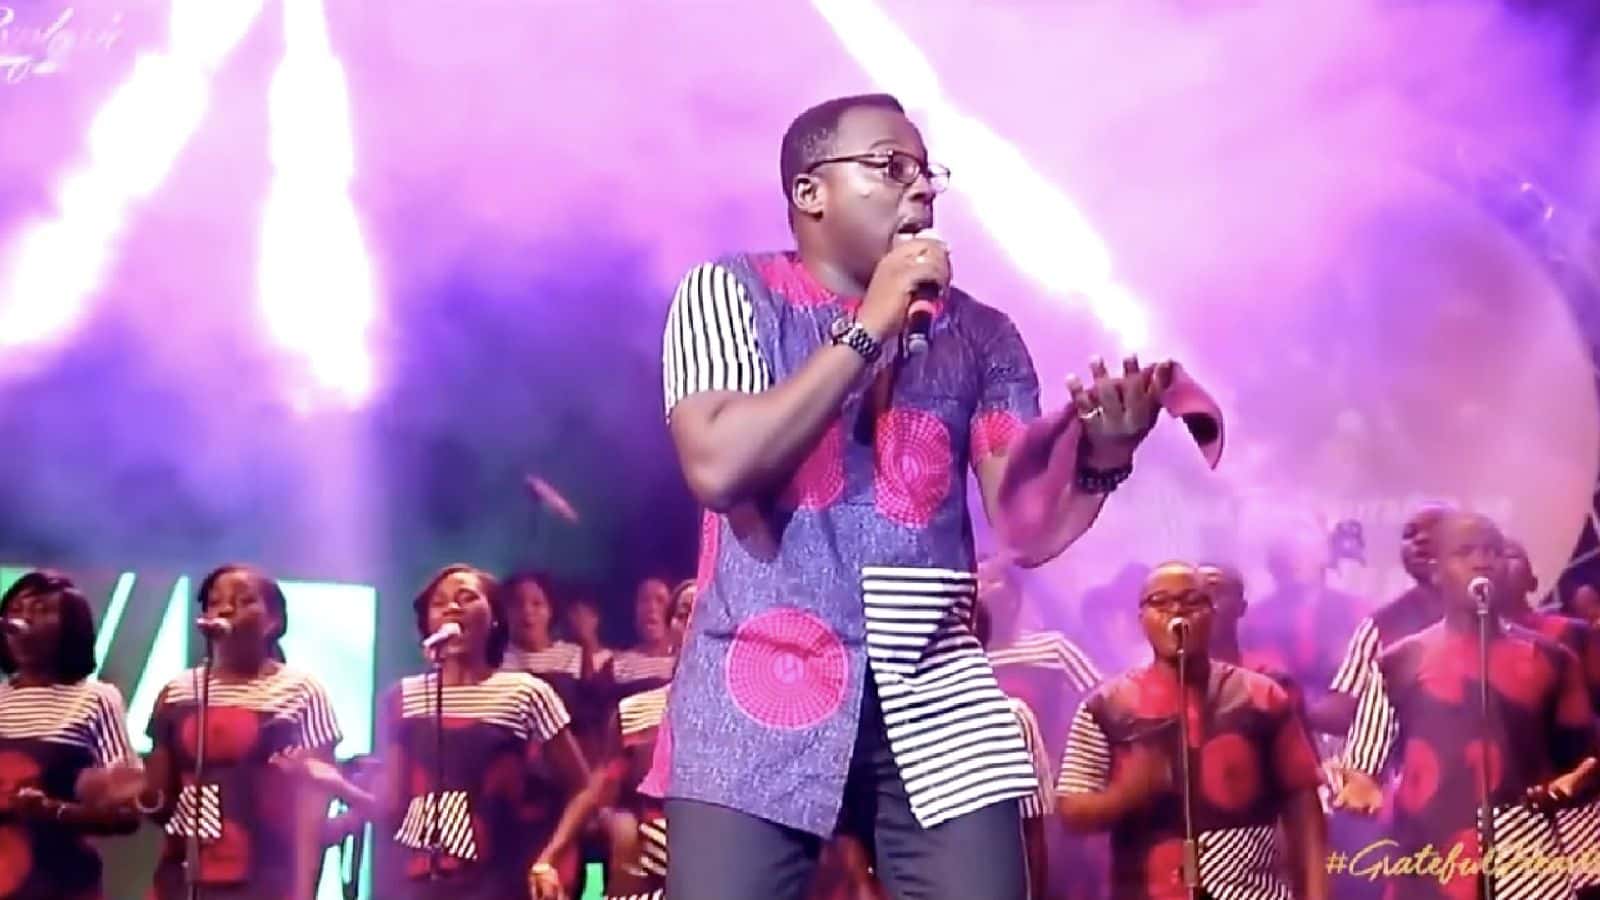 My Joyful Way Ghana Praise Medley (Live) - Joyful Way Inc. at Explosion of Joy 2016